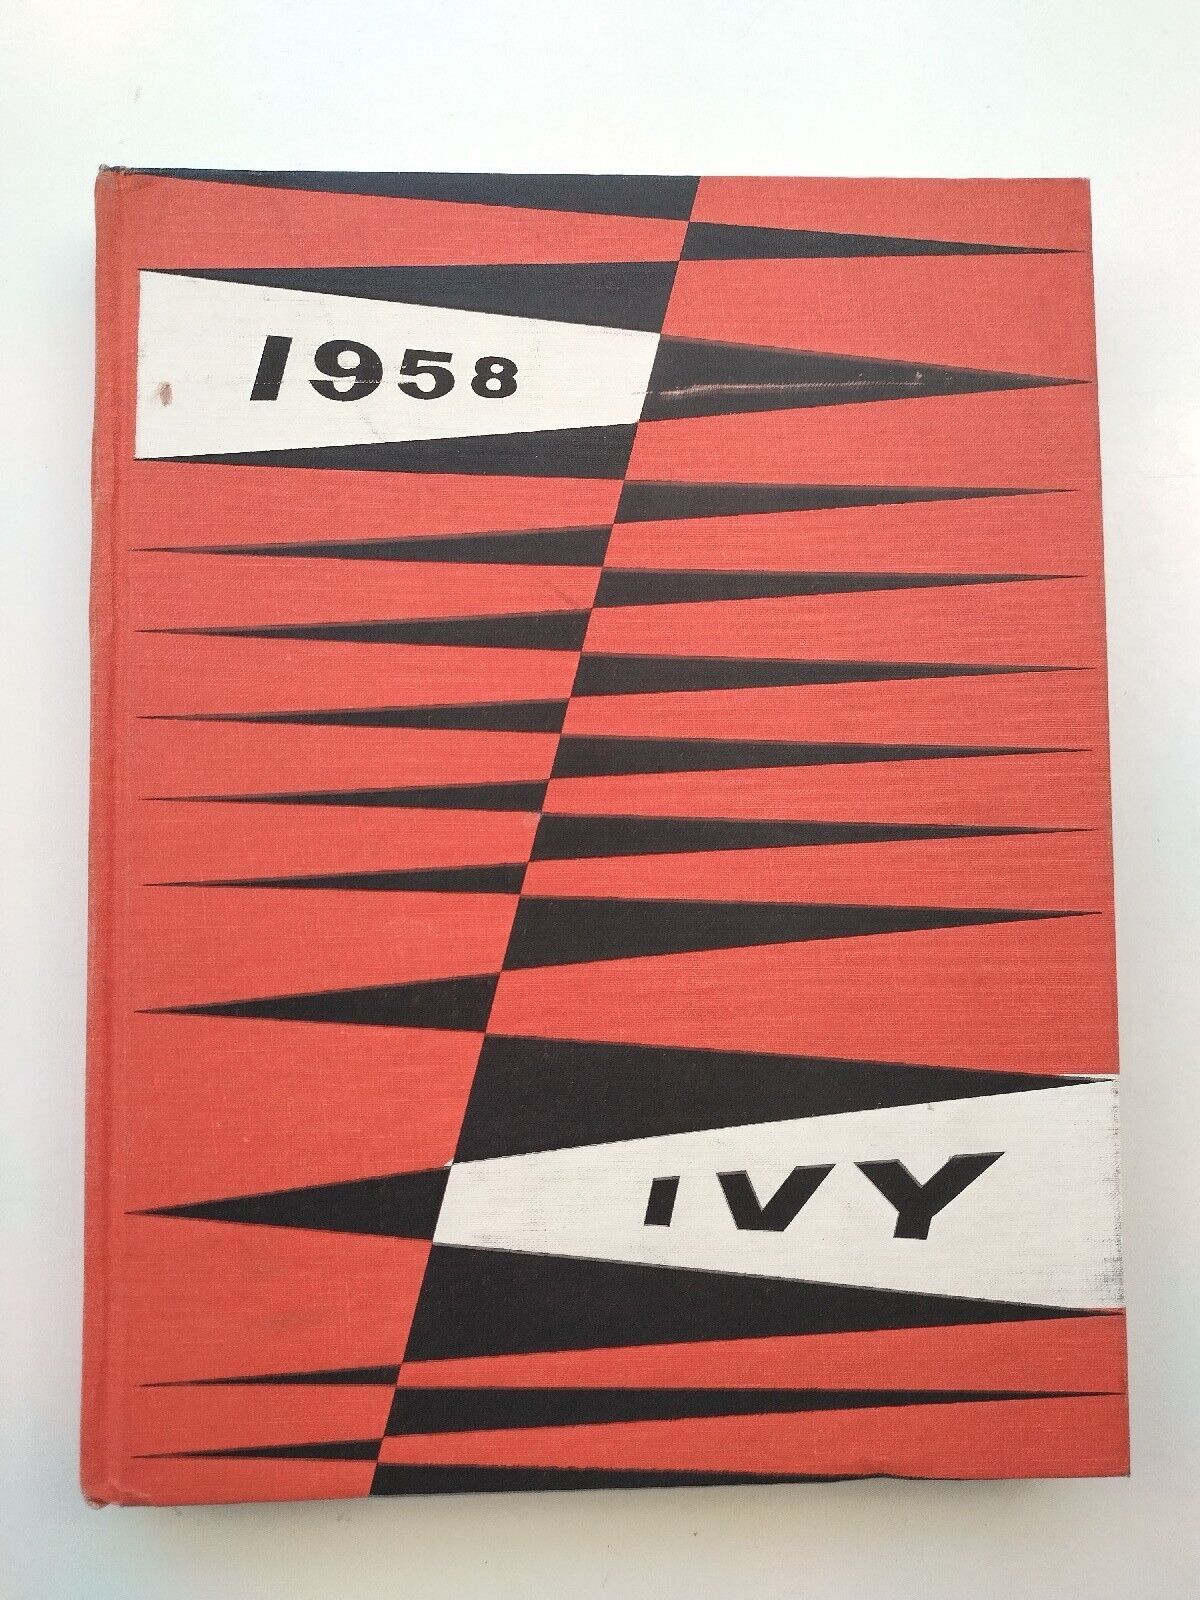 University of Wisconsin - Milwaukee 1958 IVY yearbook